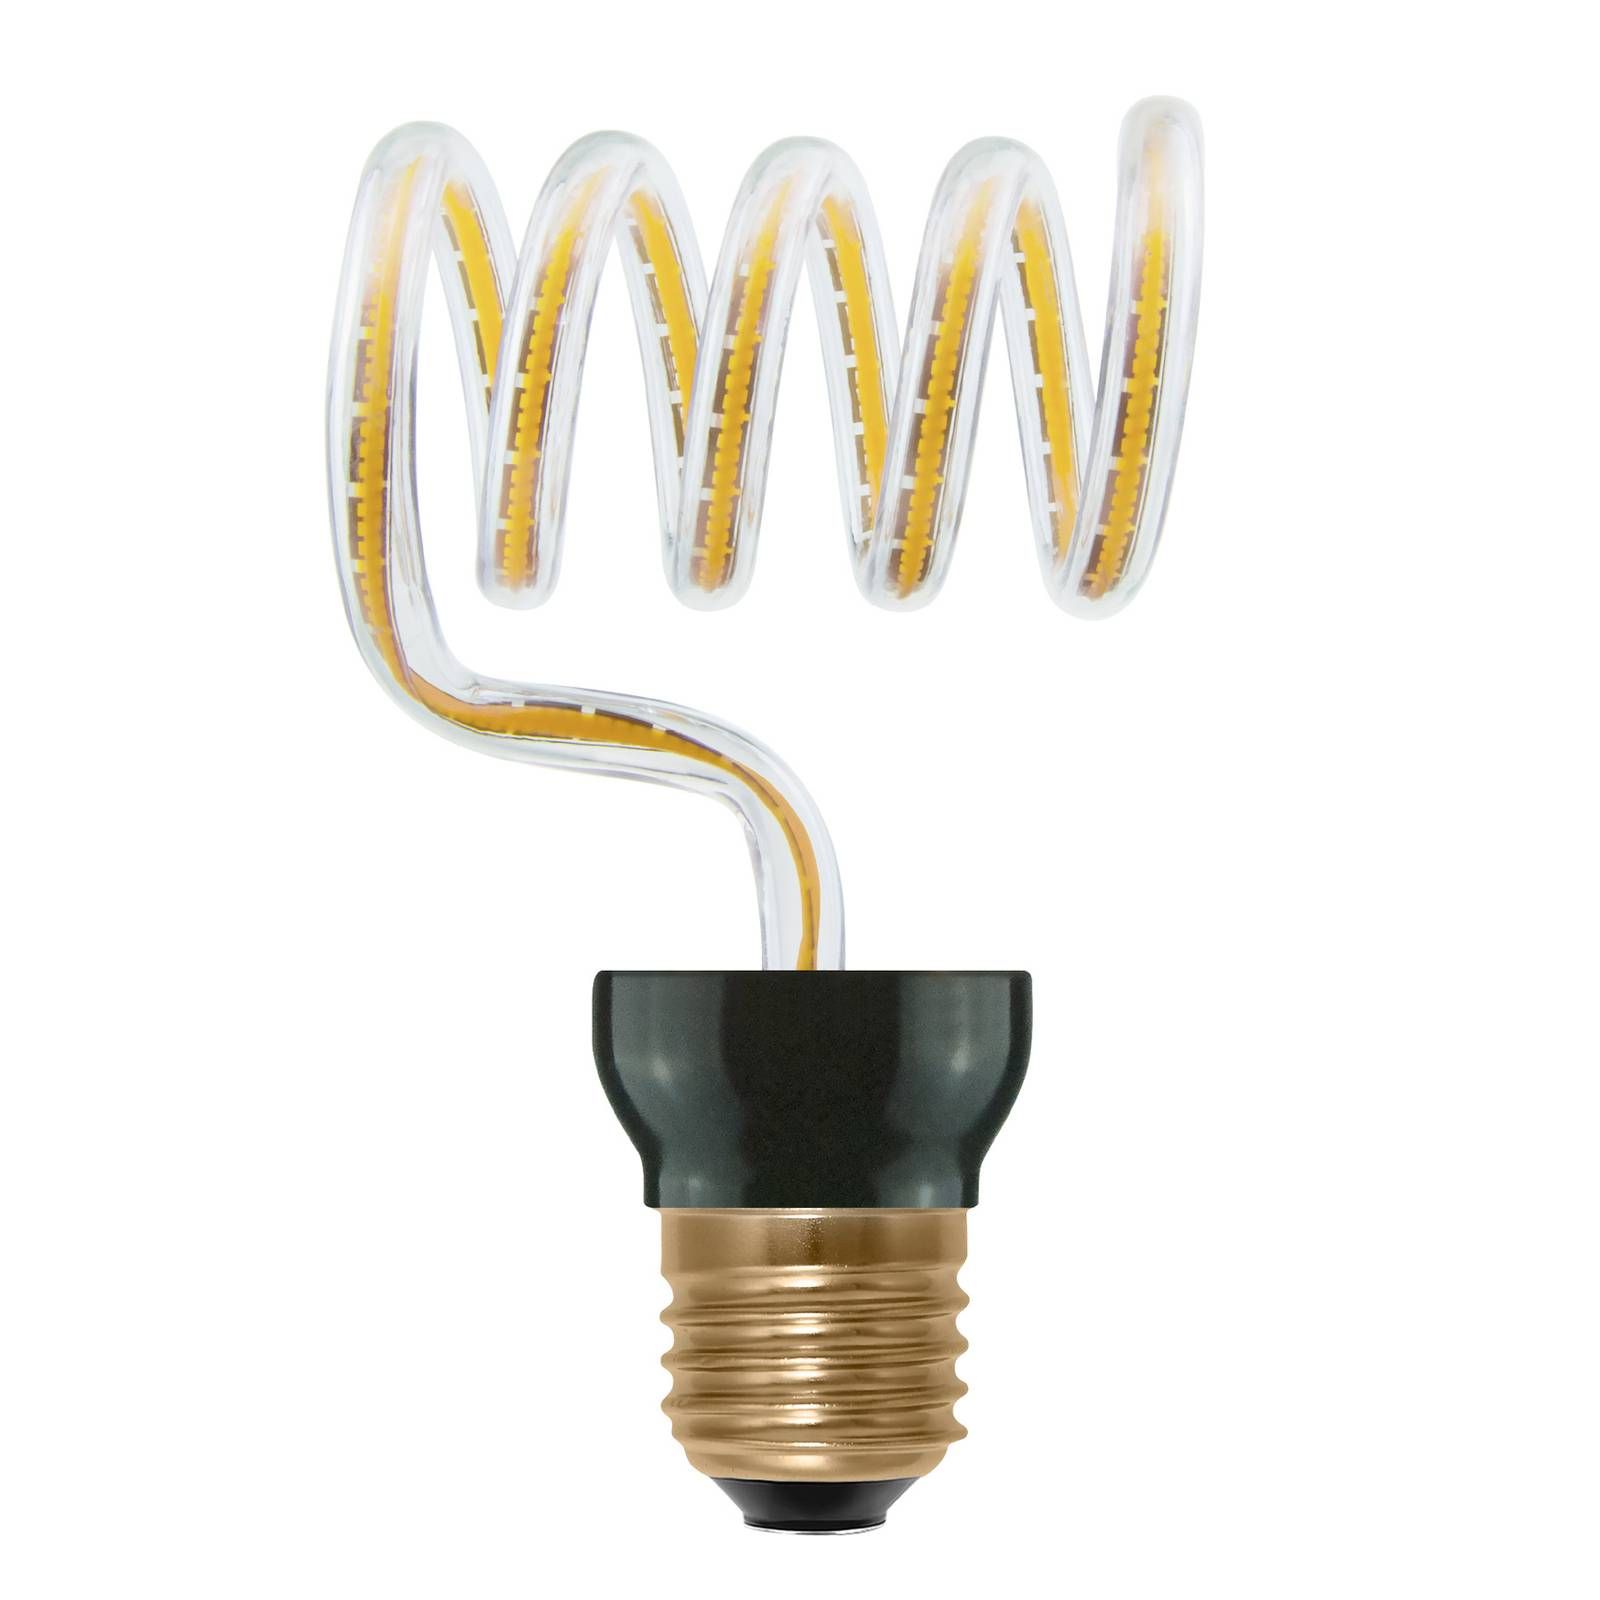 Segula SEGULA LED žiarovka Loop Cross E27 10W stmieva, polykarbonát, E27, 10W, P: 12.5 cm